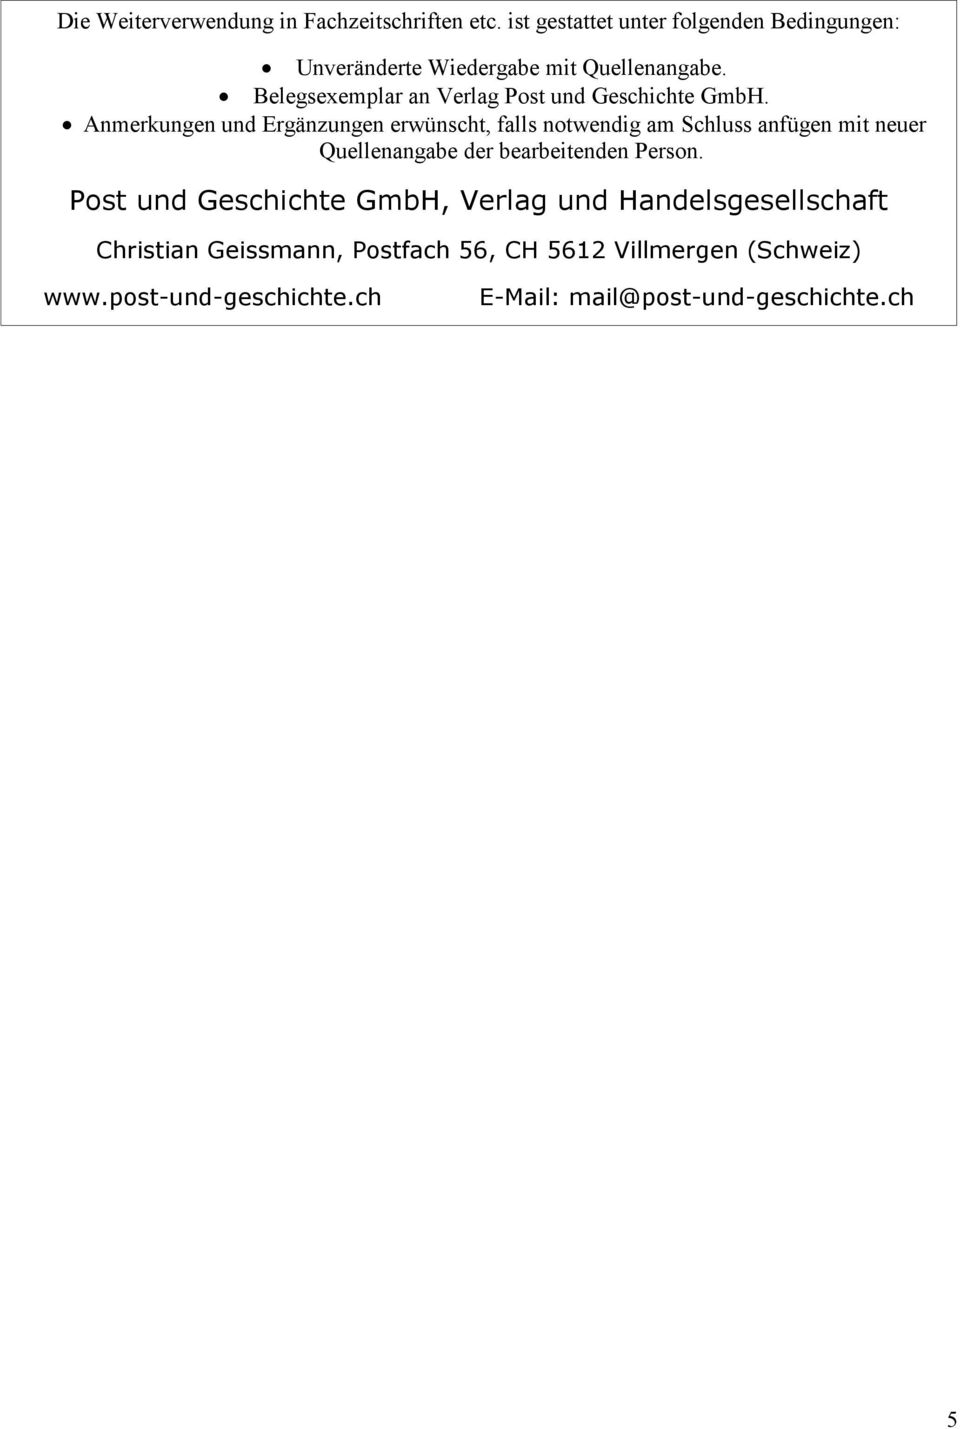 Belegsexemplar an Verlag Post und Geschichte GmbH.